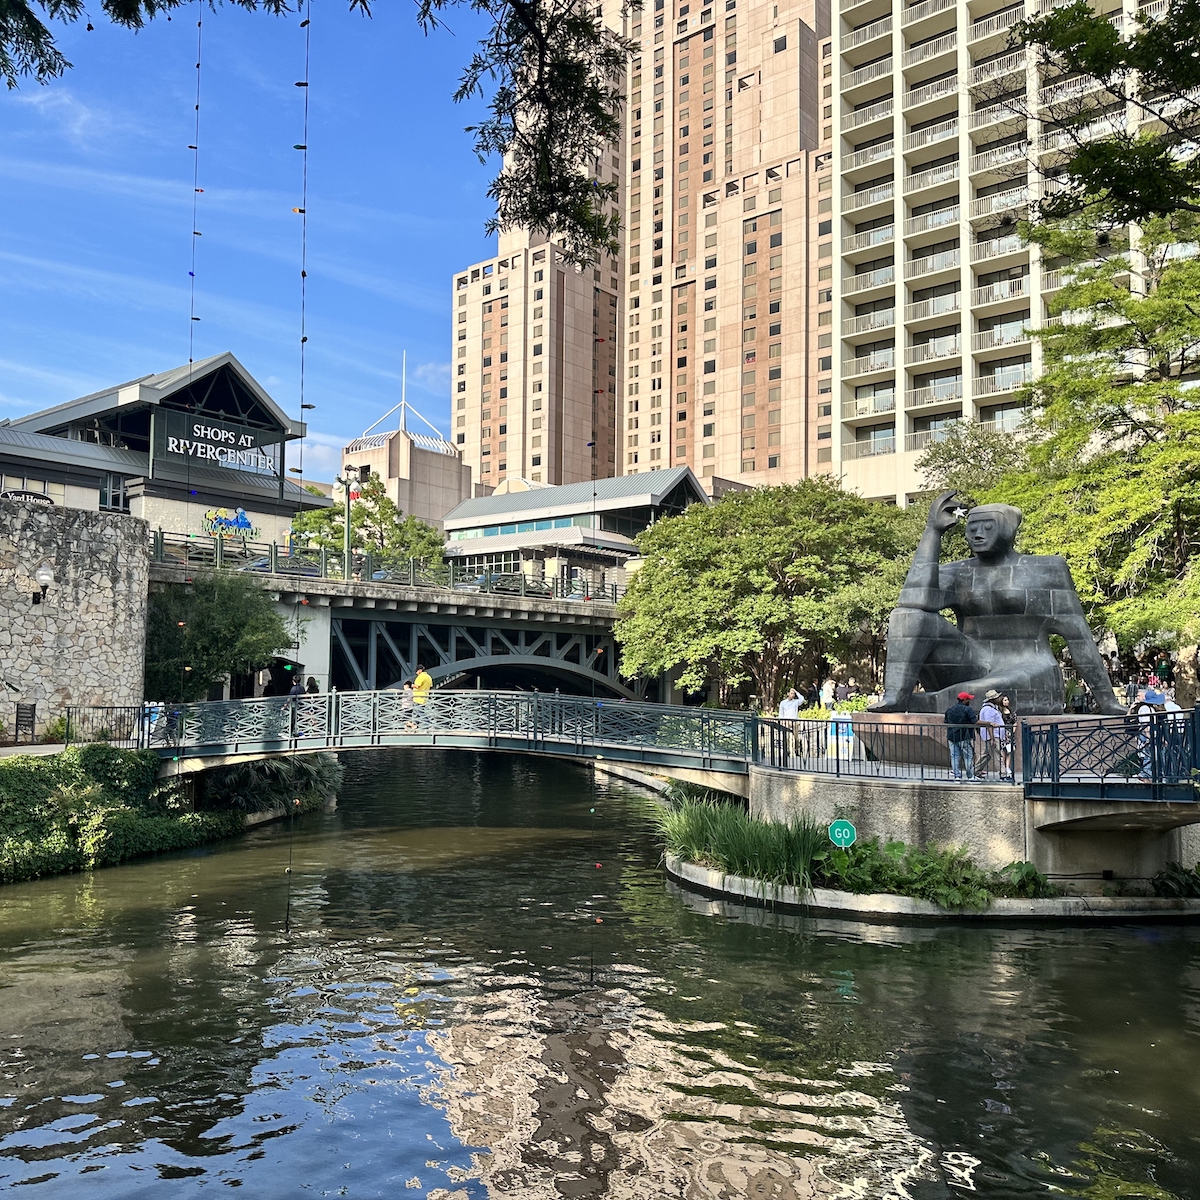 The San Antonio River Walk showing its newest public art statue